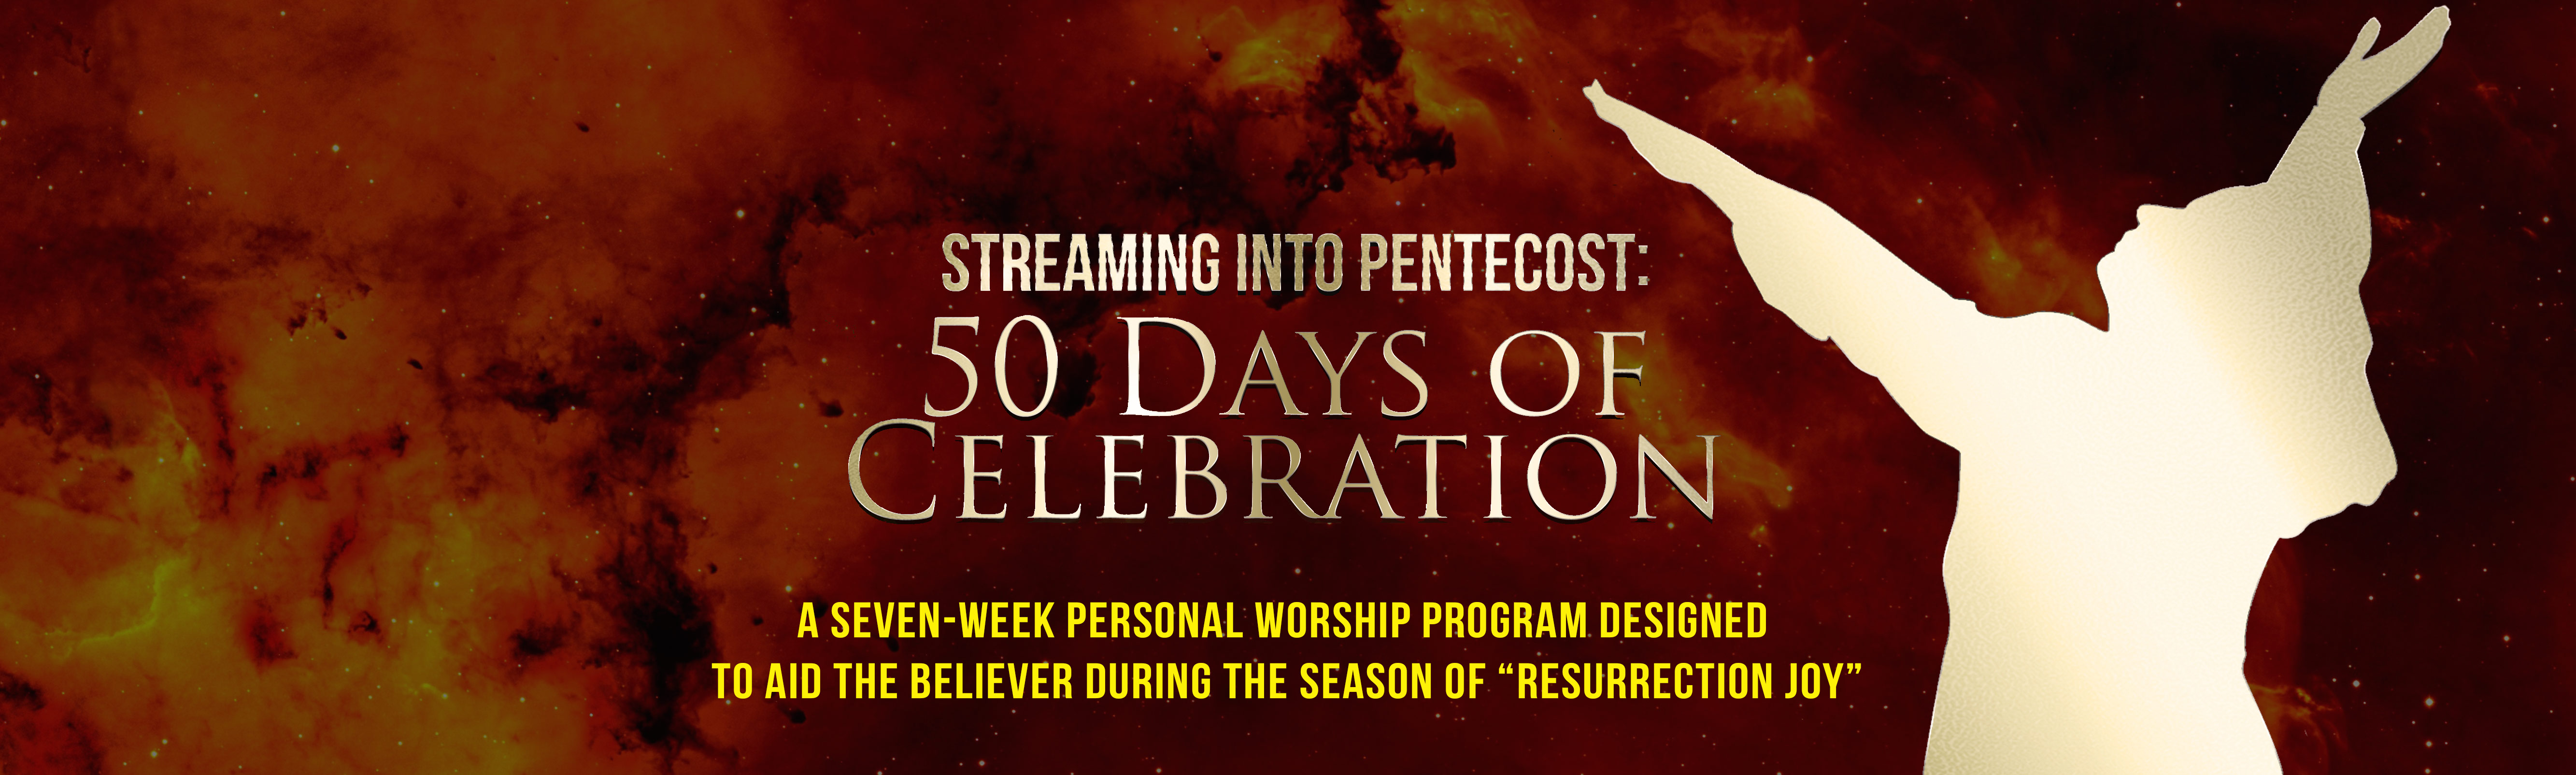 Streaming Into Pentecost